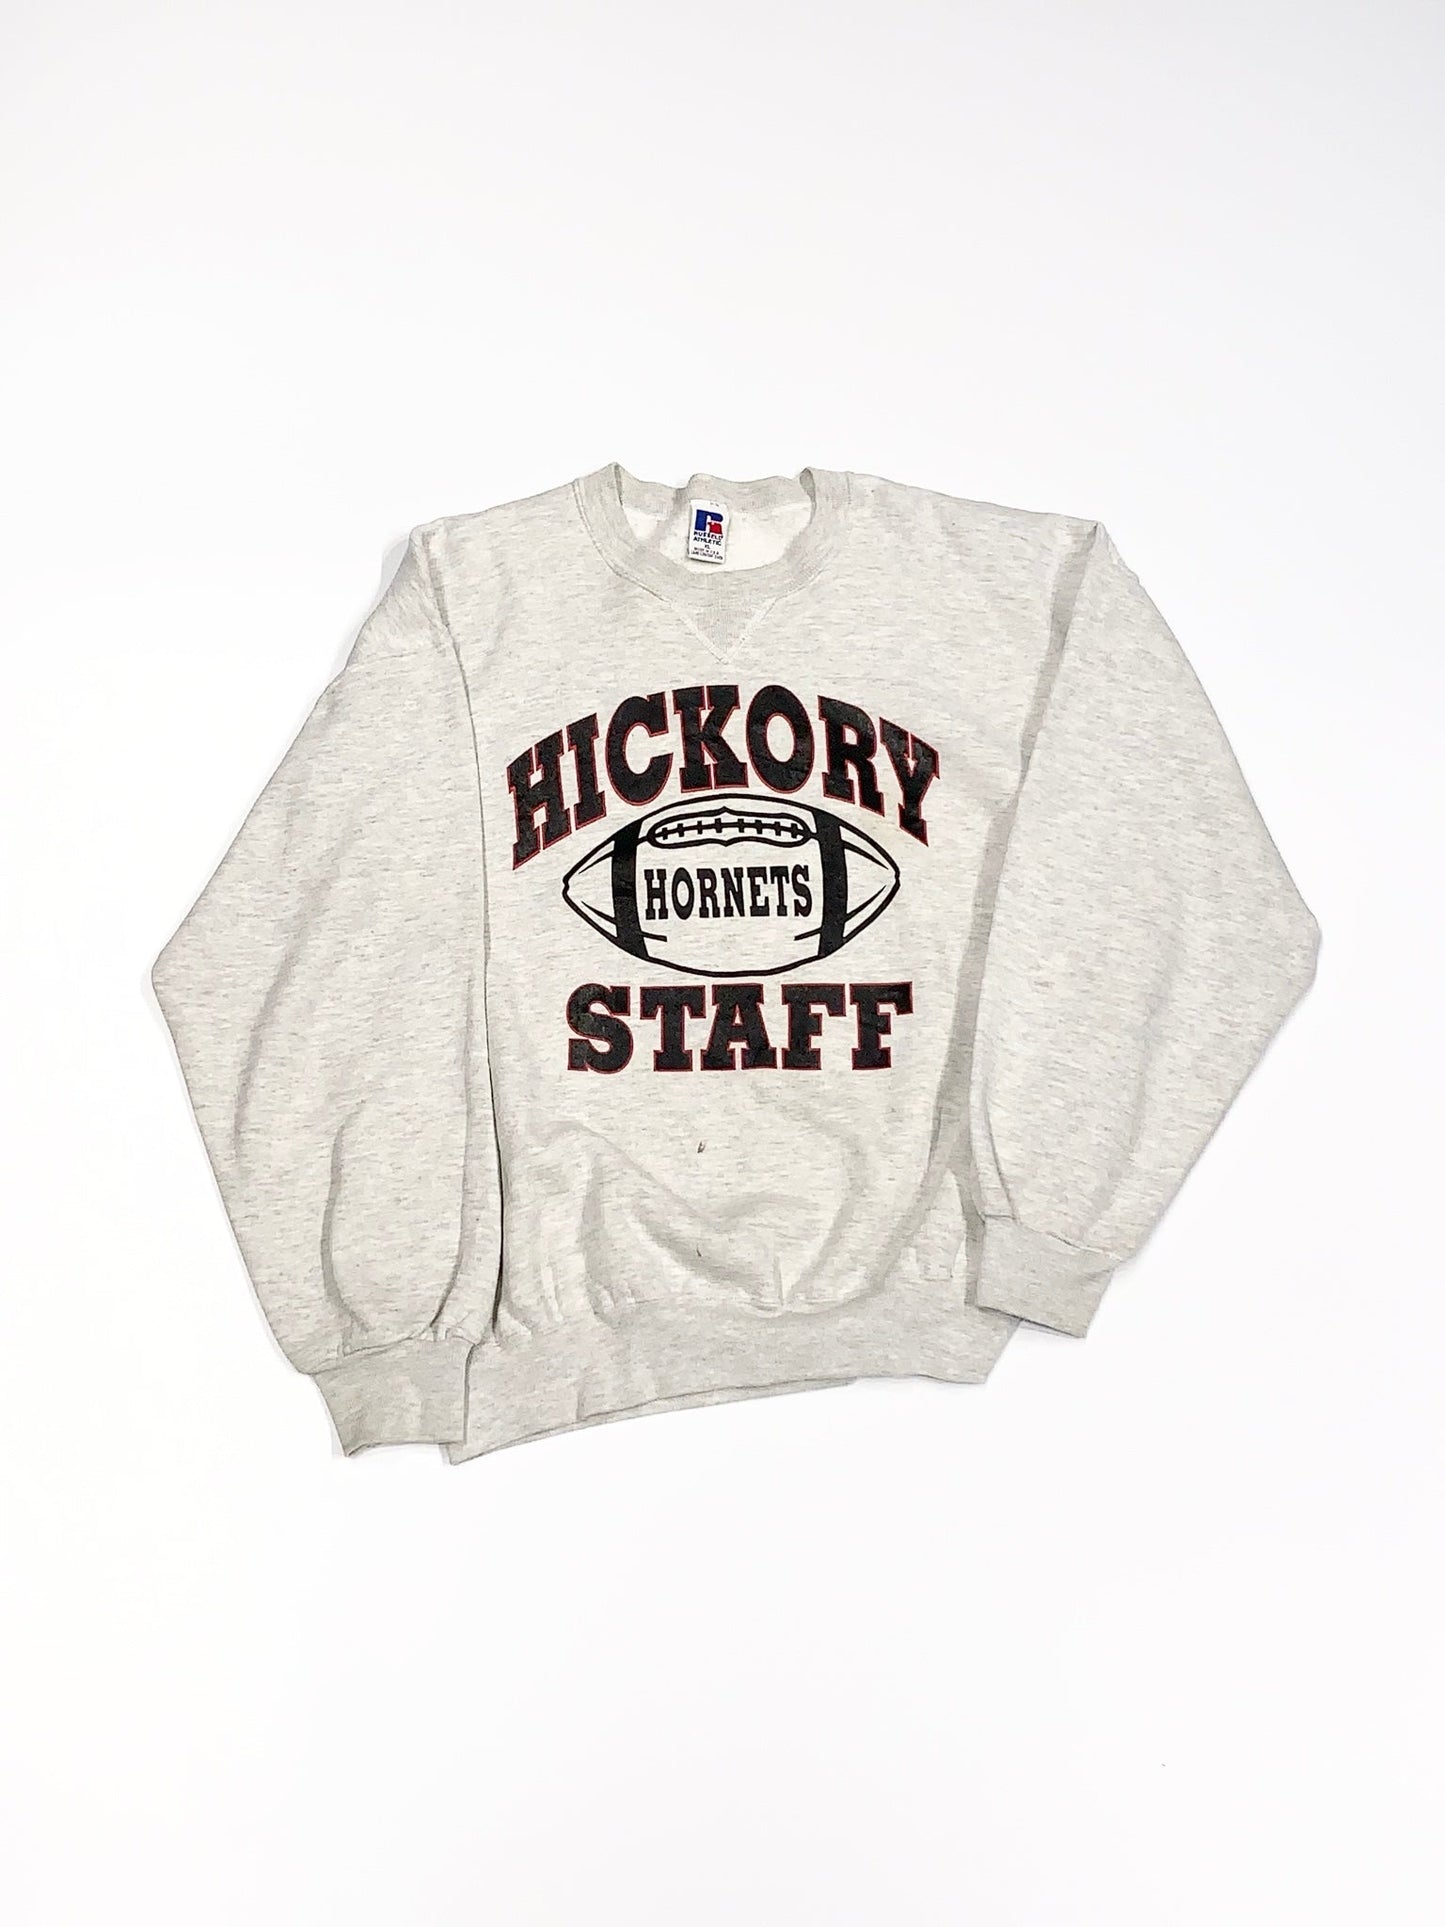 Vintage Hickory Hornets State Crewneck Sweater Grey